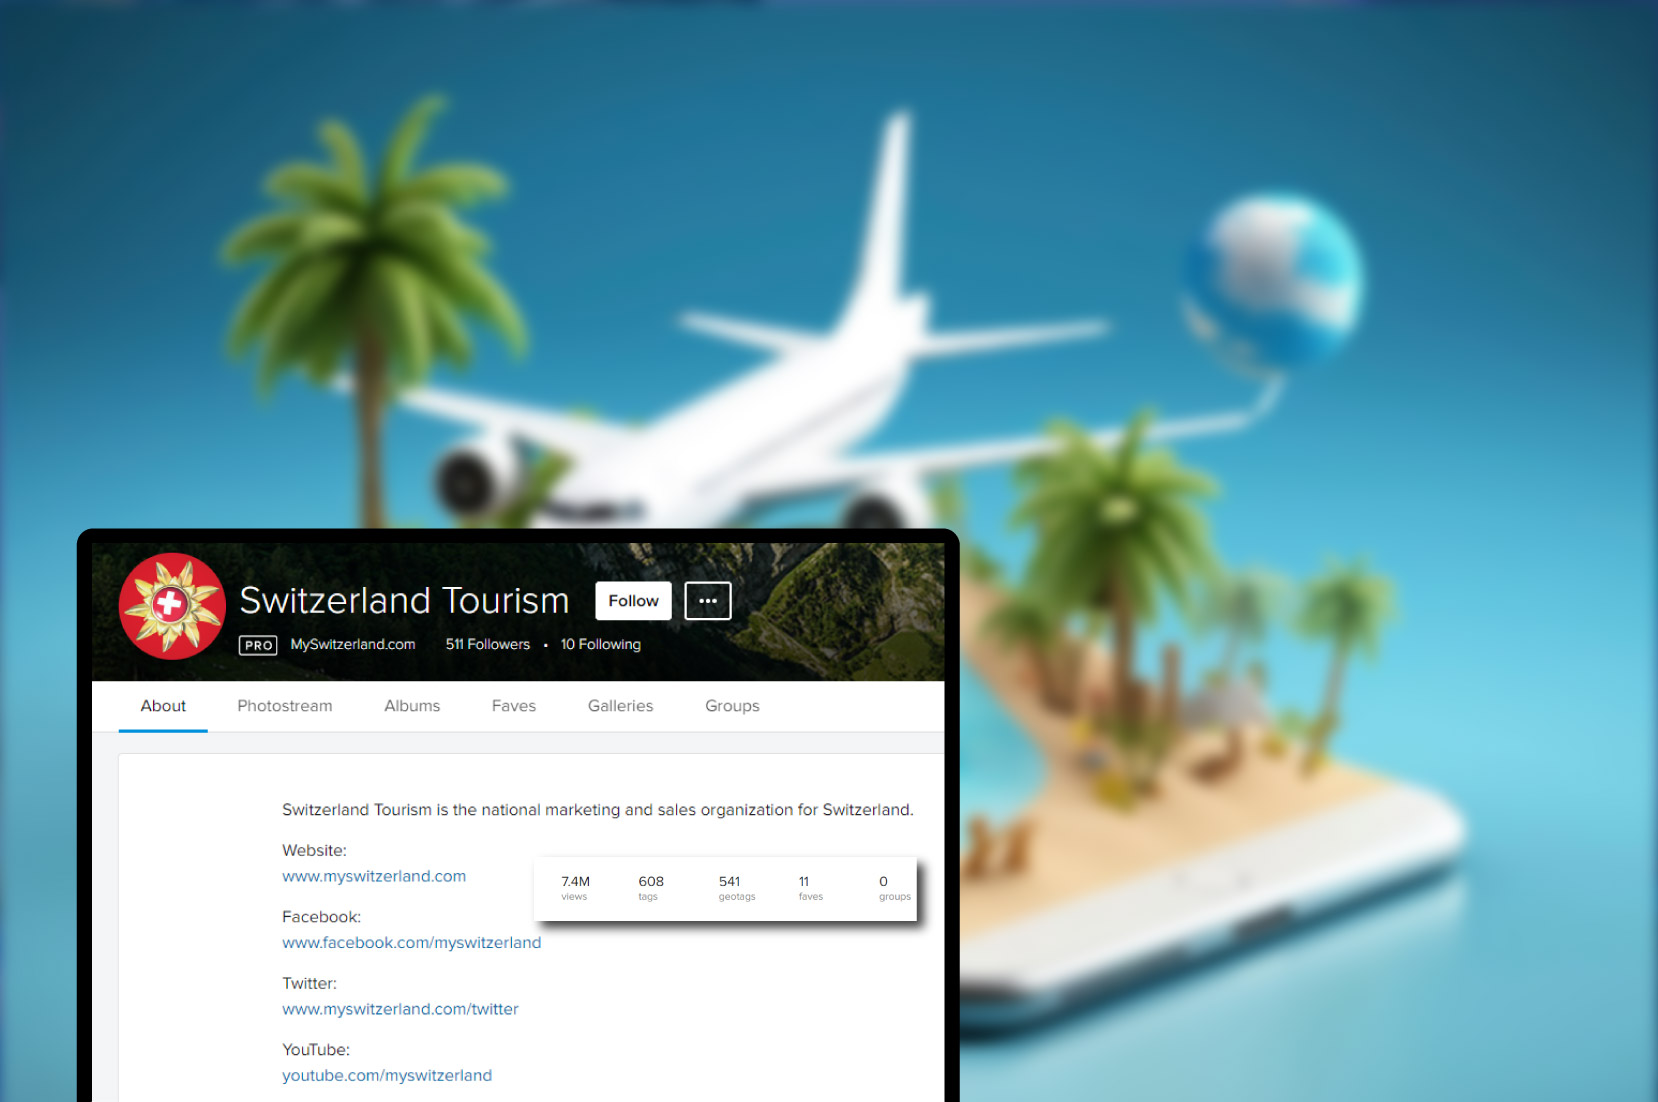 Tourism-&-Destination-Marketing-through-Flickr-Data-Scraping-A-Visual-Voyage